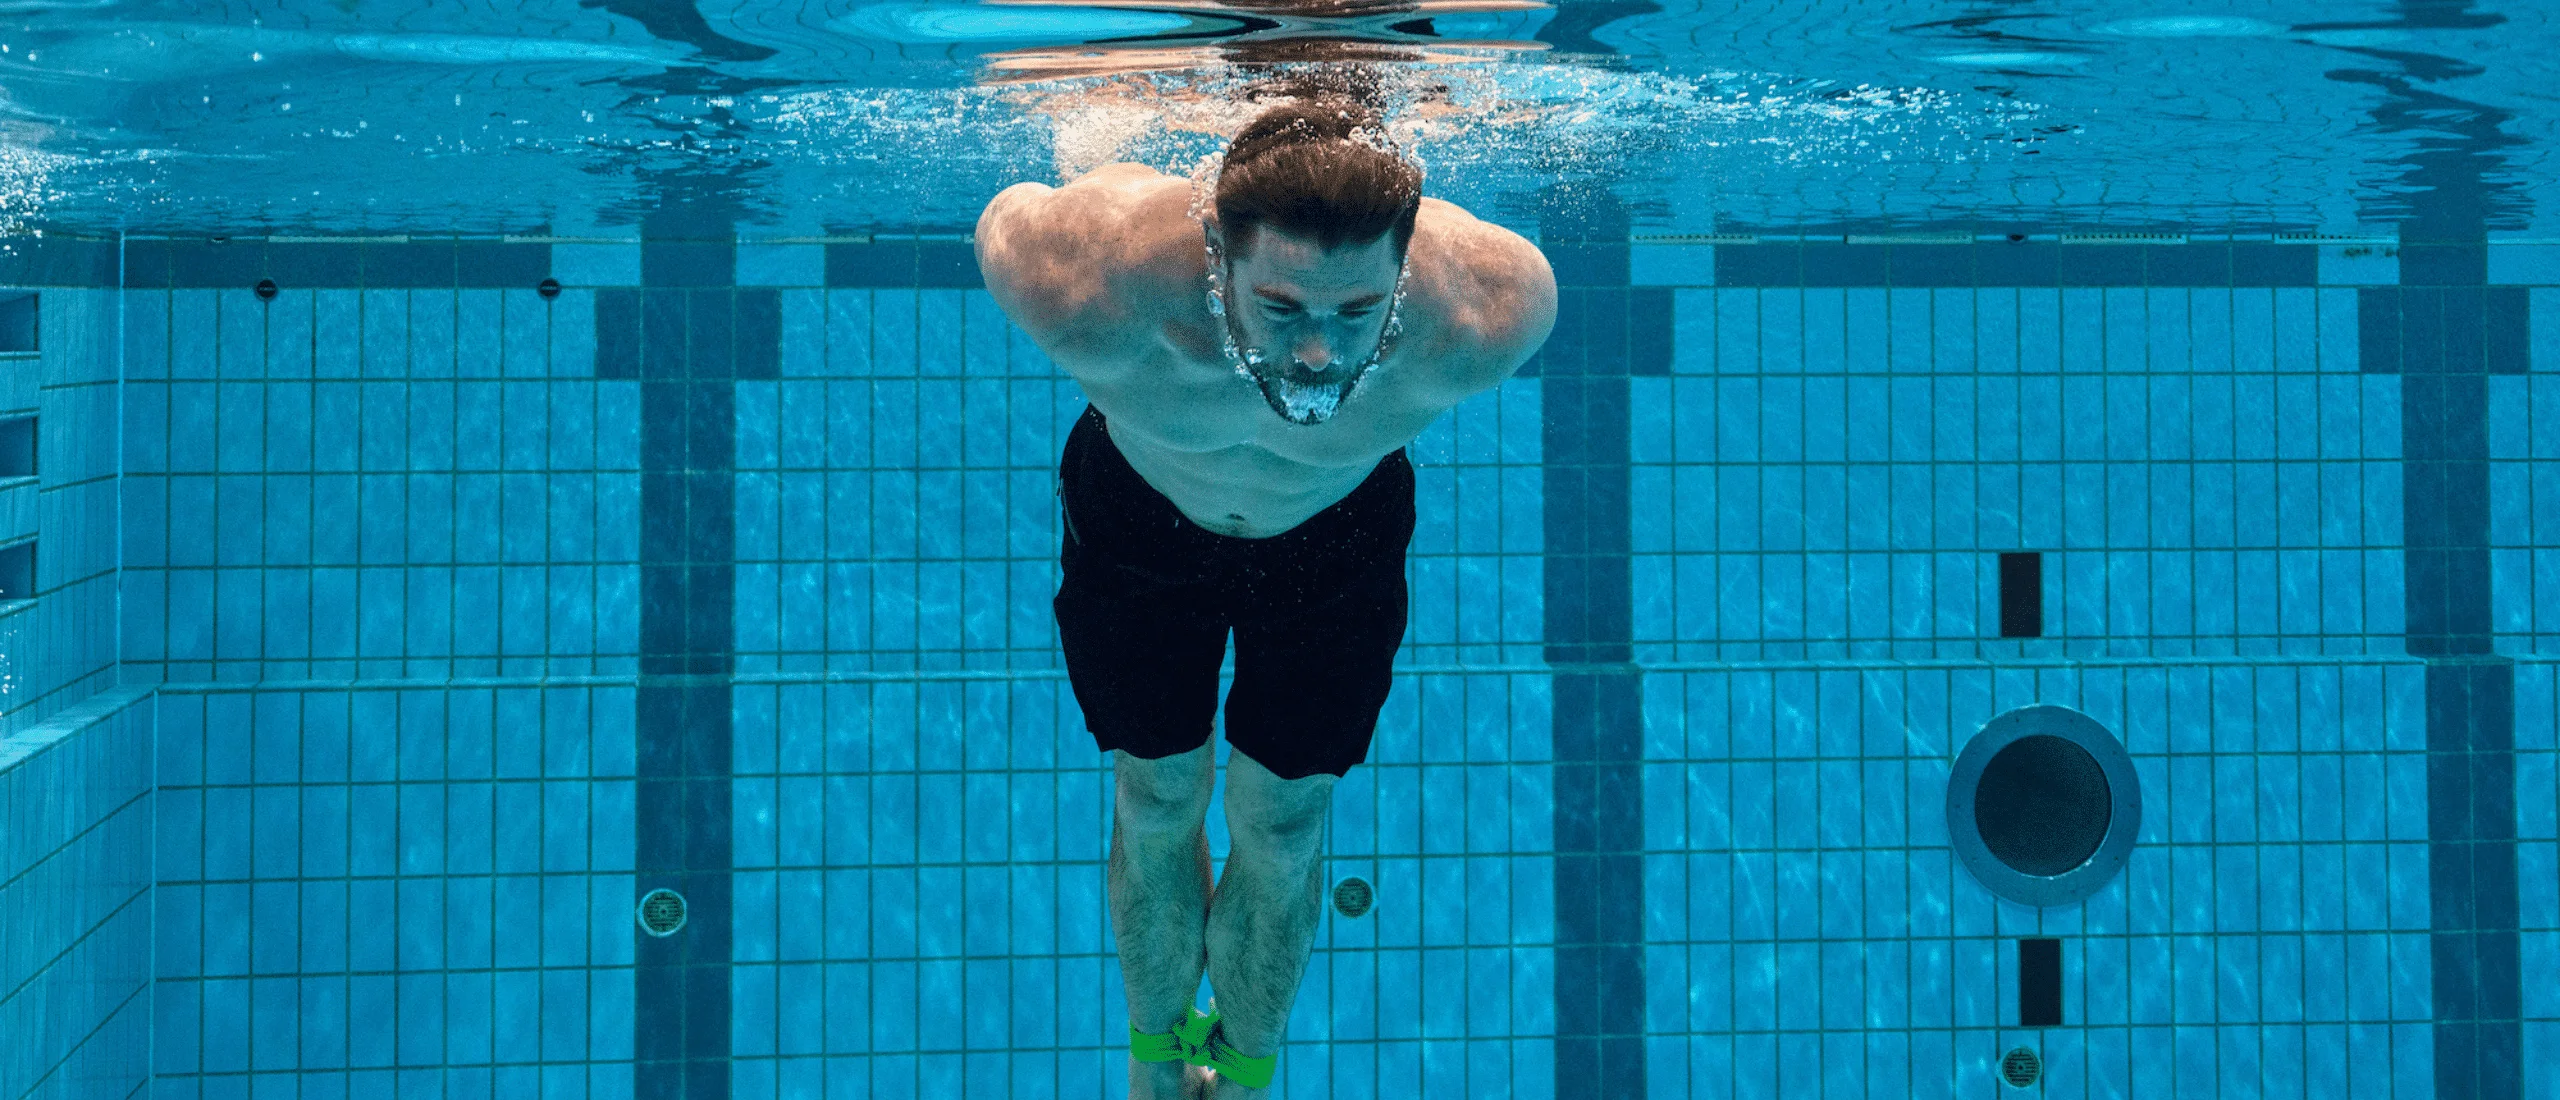 Chris Hemsworth swimming in a pool